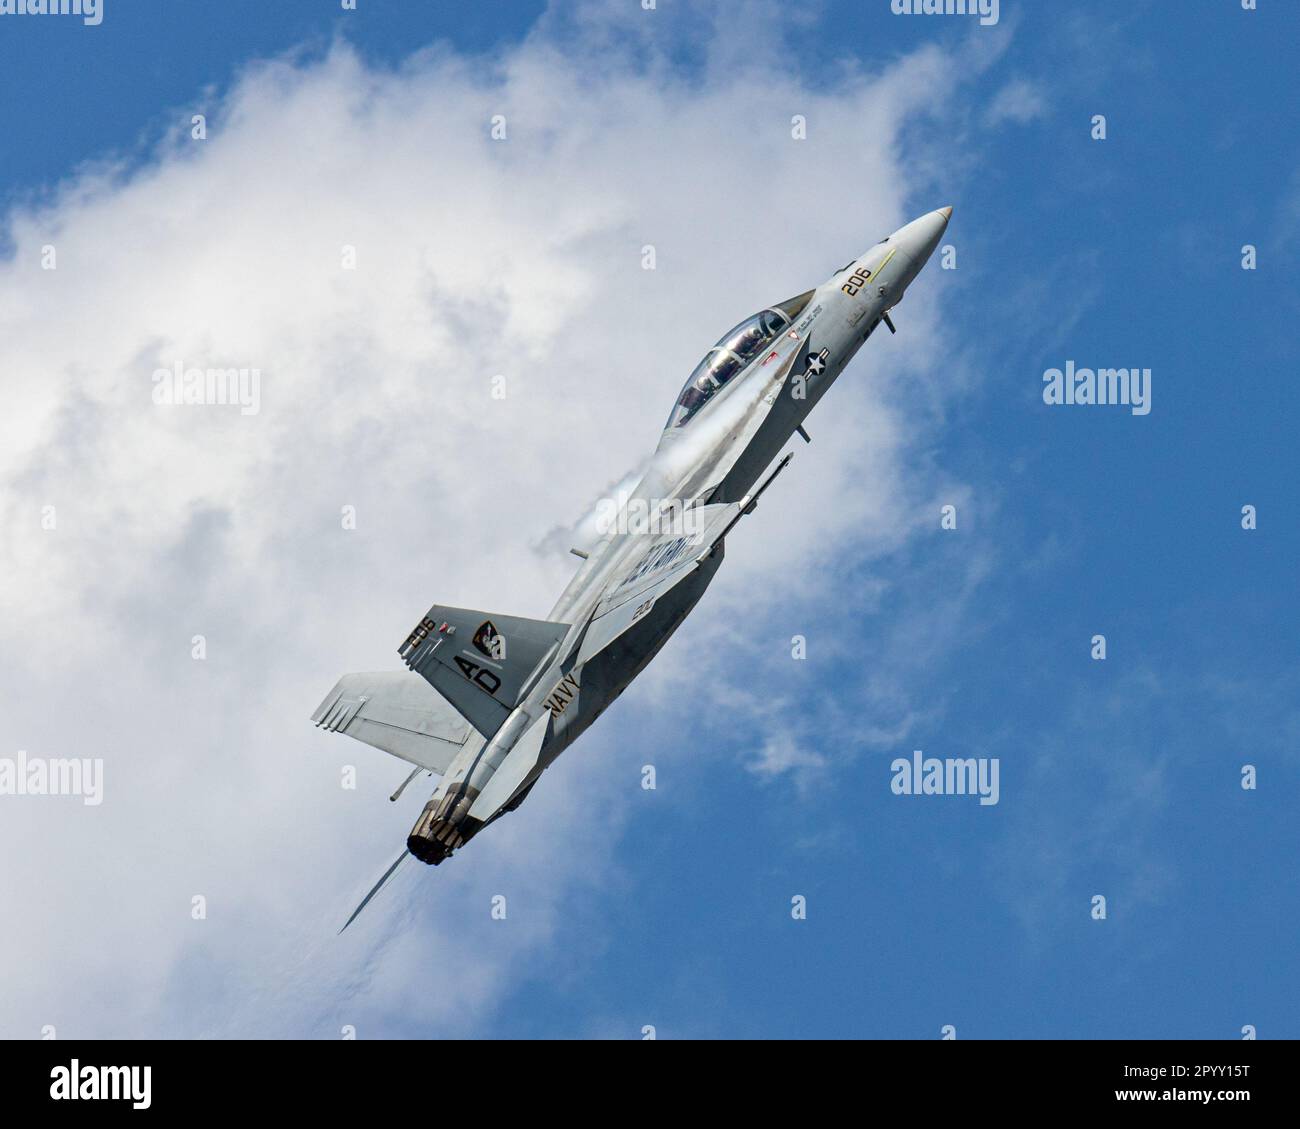 The amazing Hornet fighter jet. Stock Photo